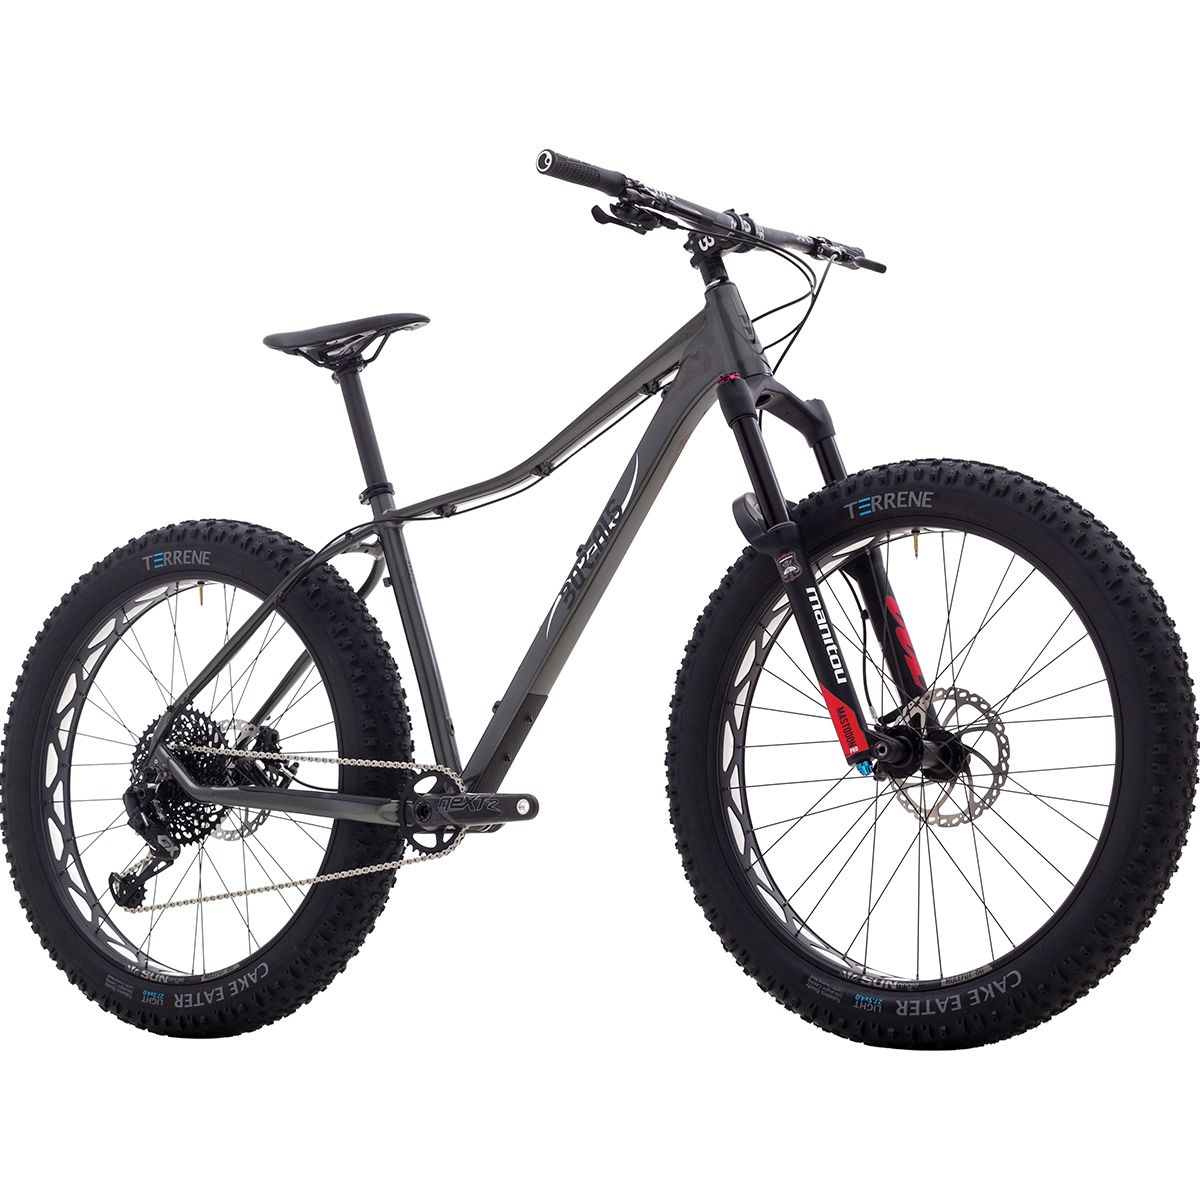 Borealis Bikes Telluride GX Eagle/Mastodon Fat Bike